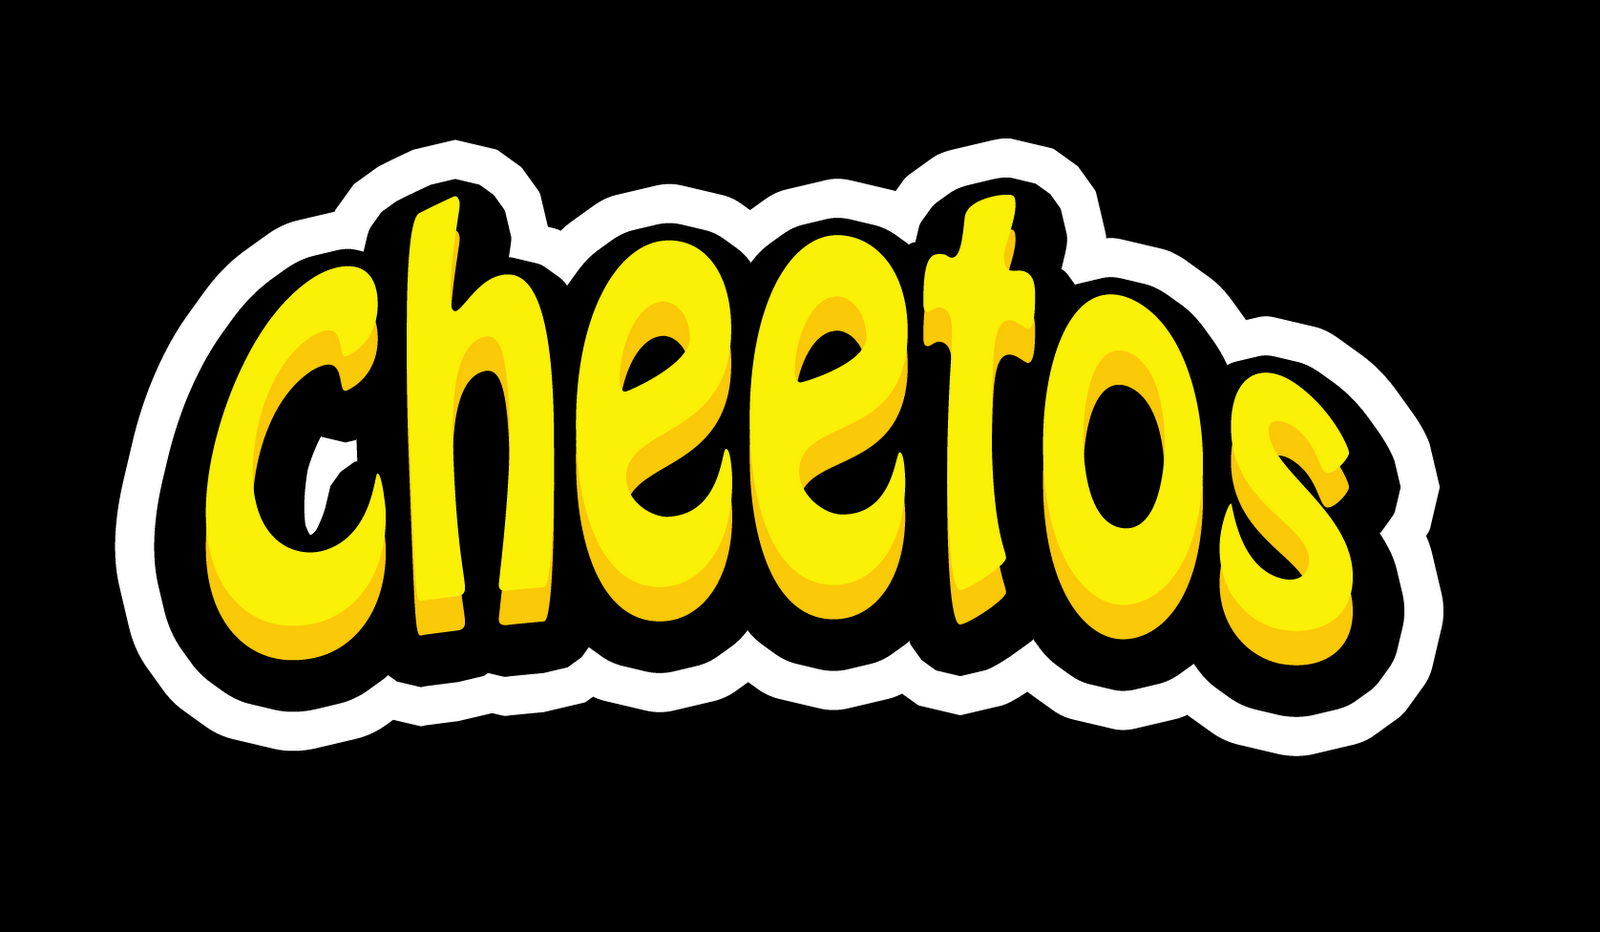 Hot Cheetos Logo, www.imgkid.com, The Image Kid Has It! 